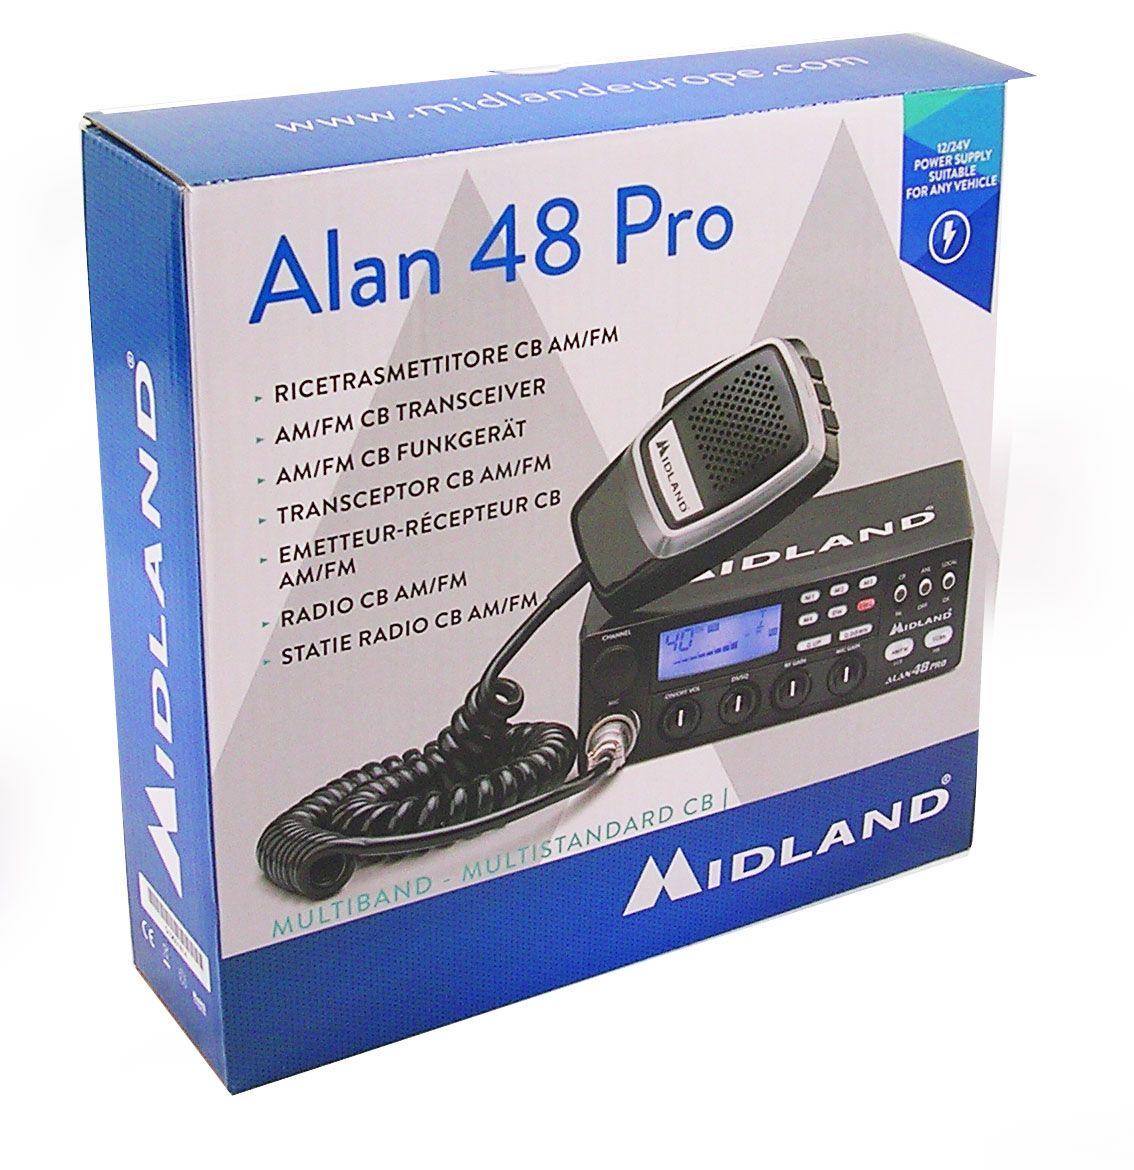 CB Radio Midland Alan 48 PRO Multi Standard Midland AM FM 12V 40 Channel